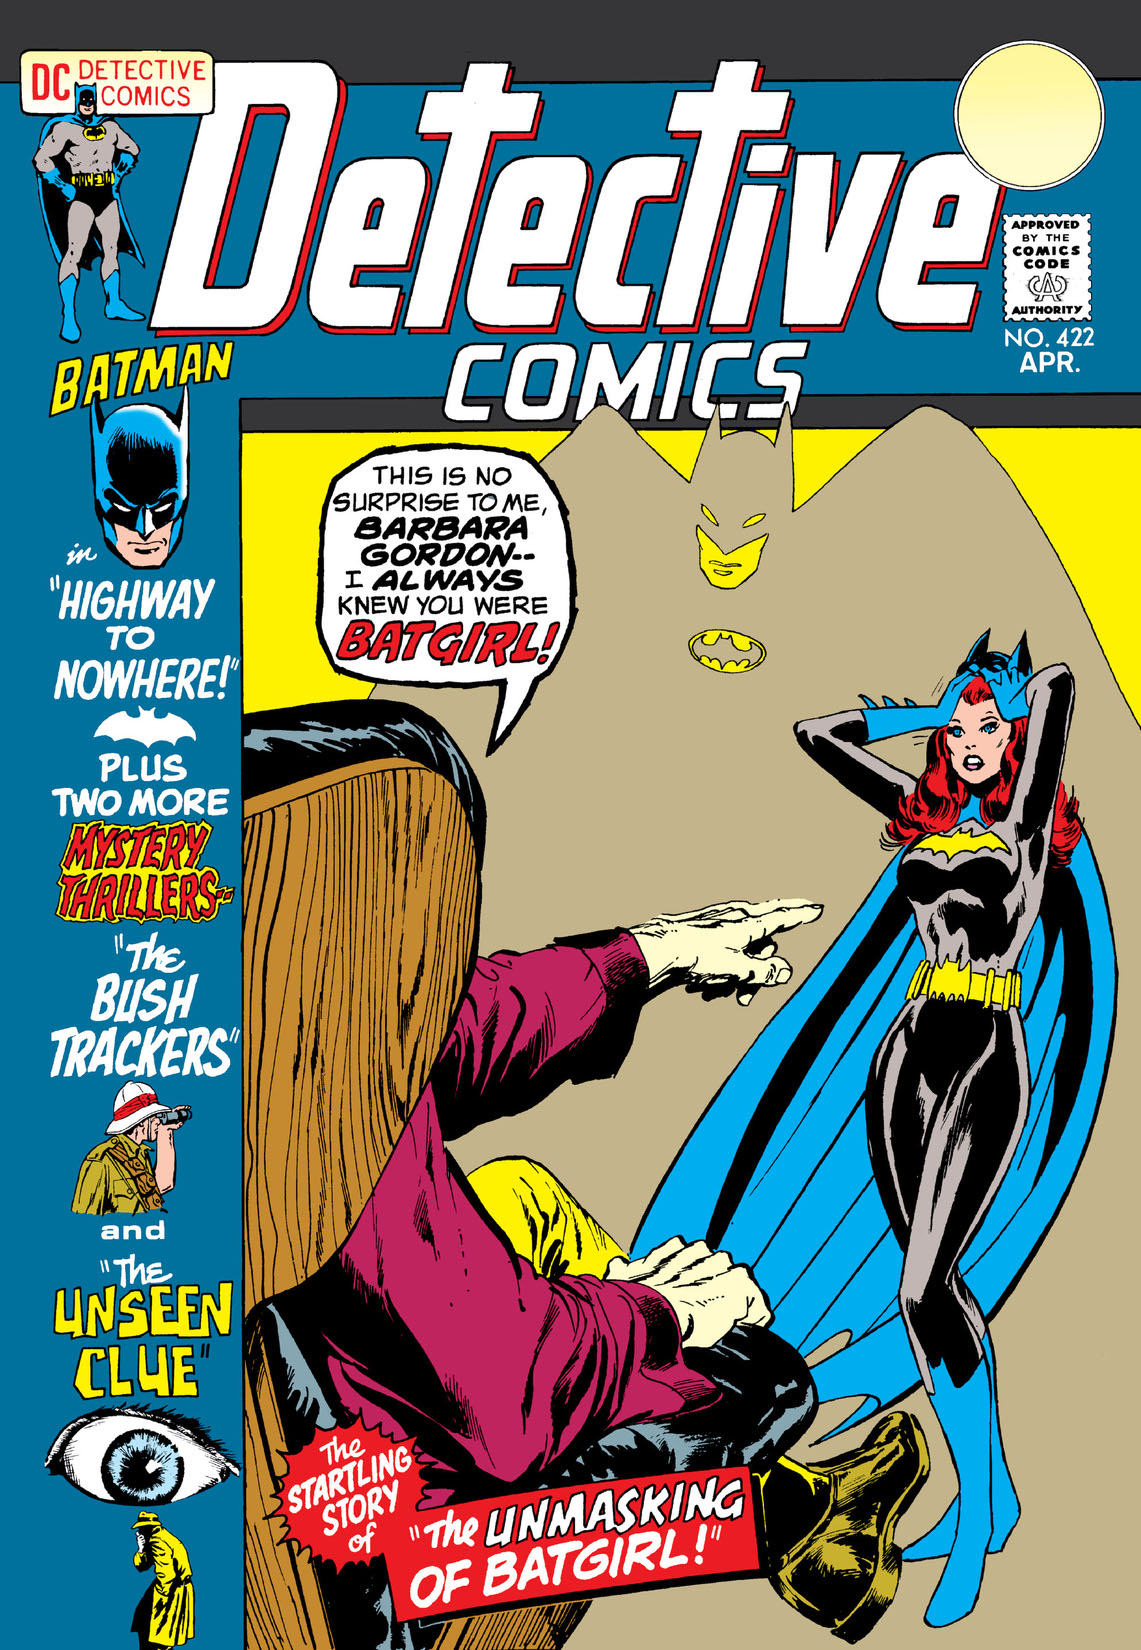 Detective Comics (1937-) #422 preview images